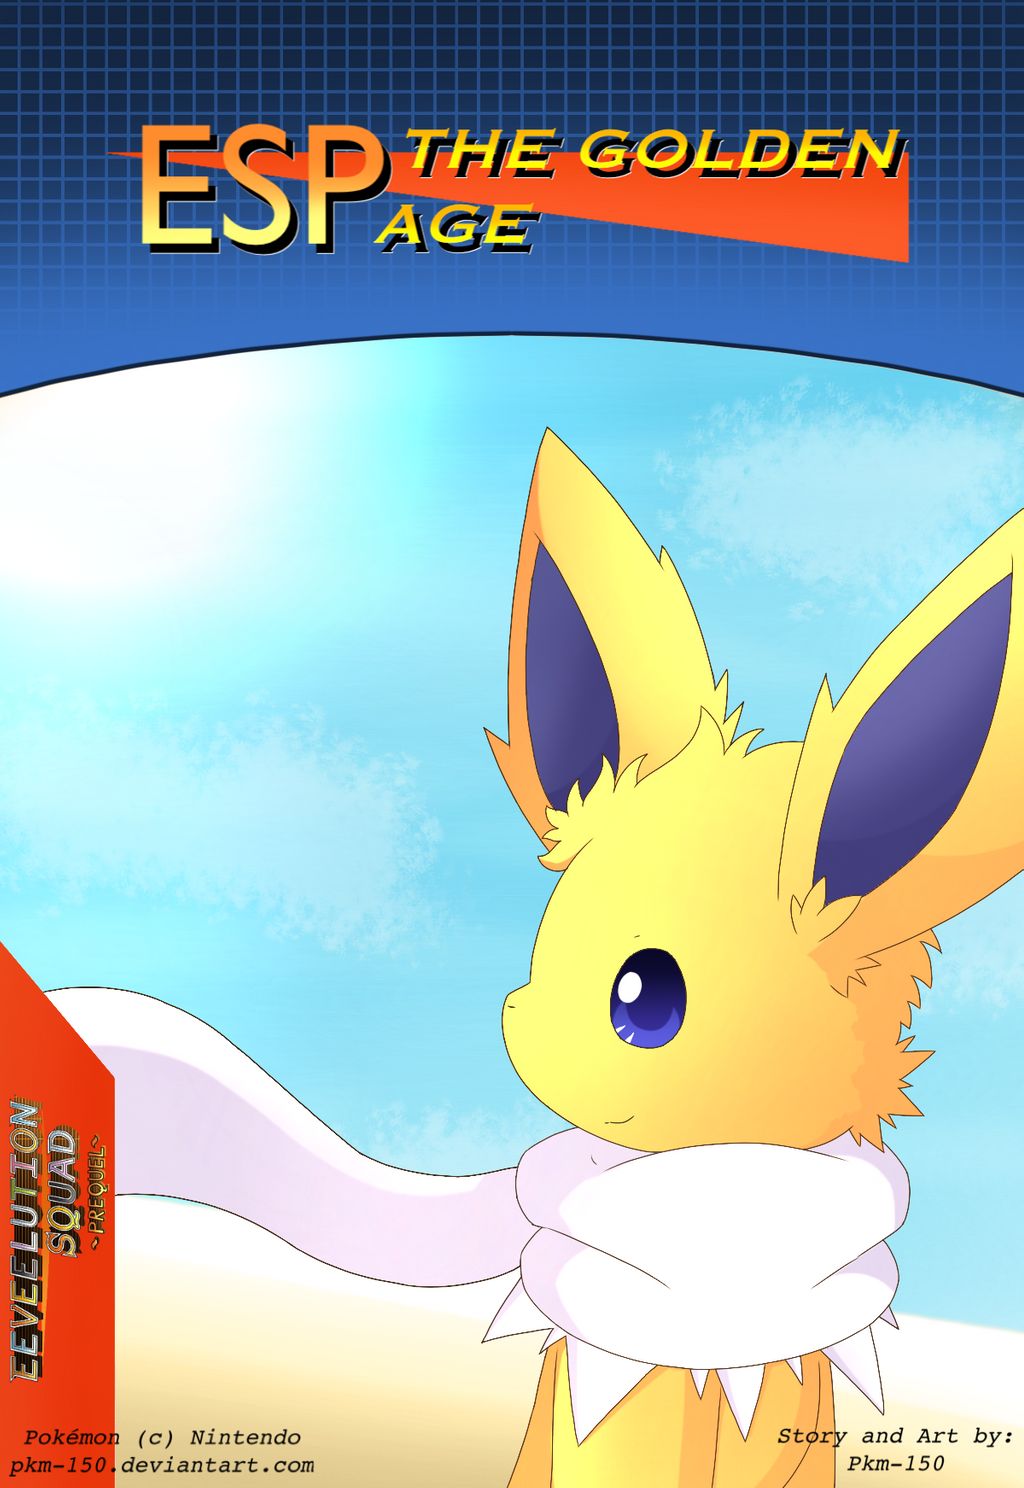 Spreegun on X: Day 489 of drawing one pokemon per day. Legendary